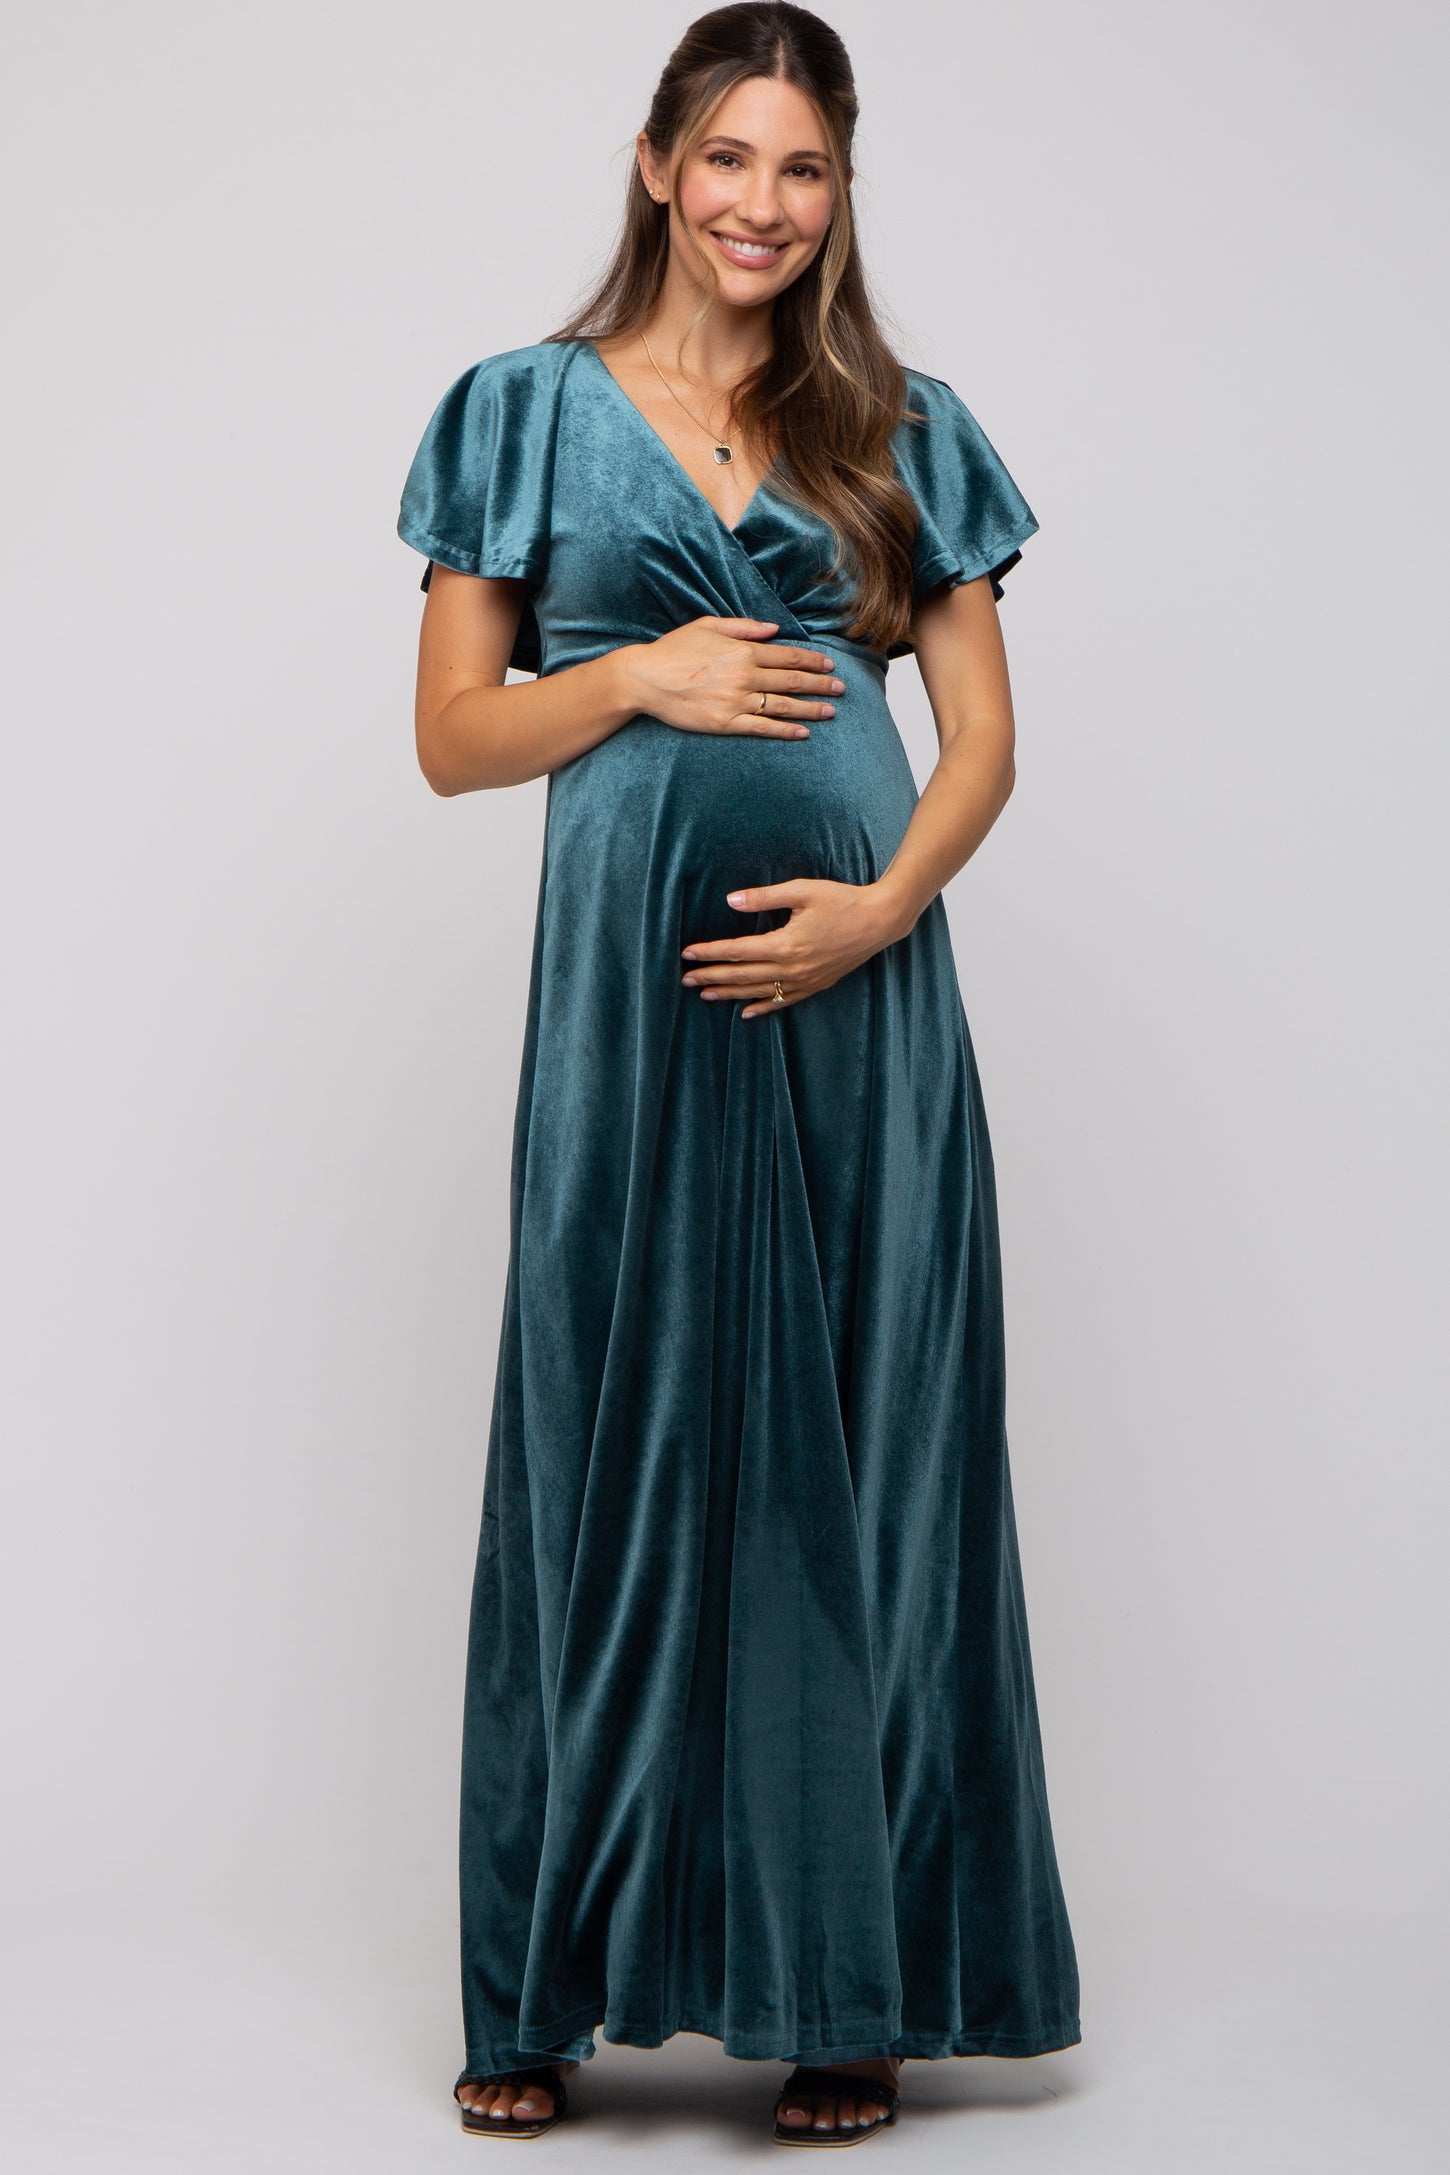  Rheane Maternity Dress for Photoshoot Maternity